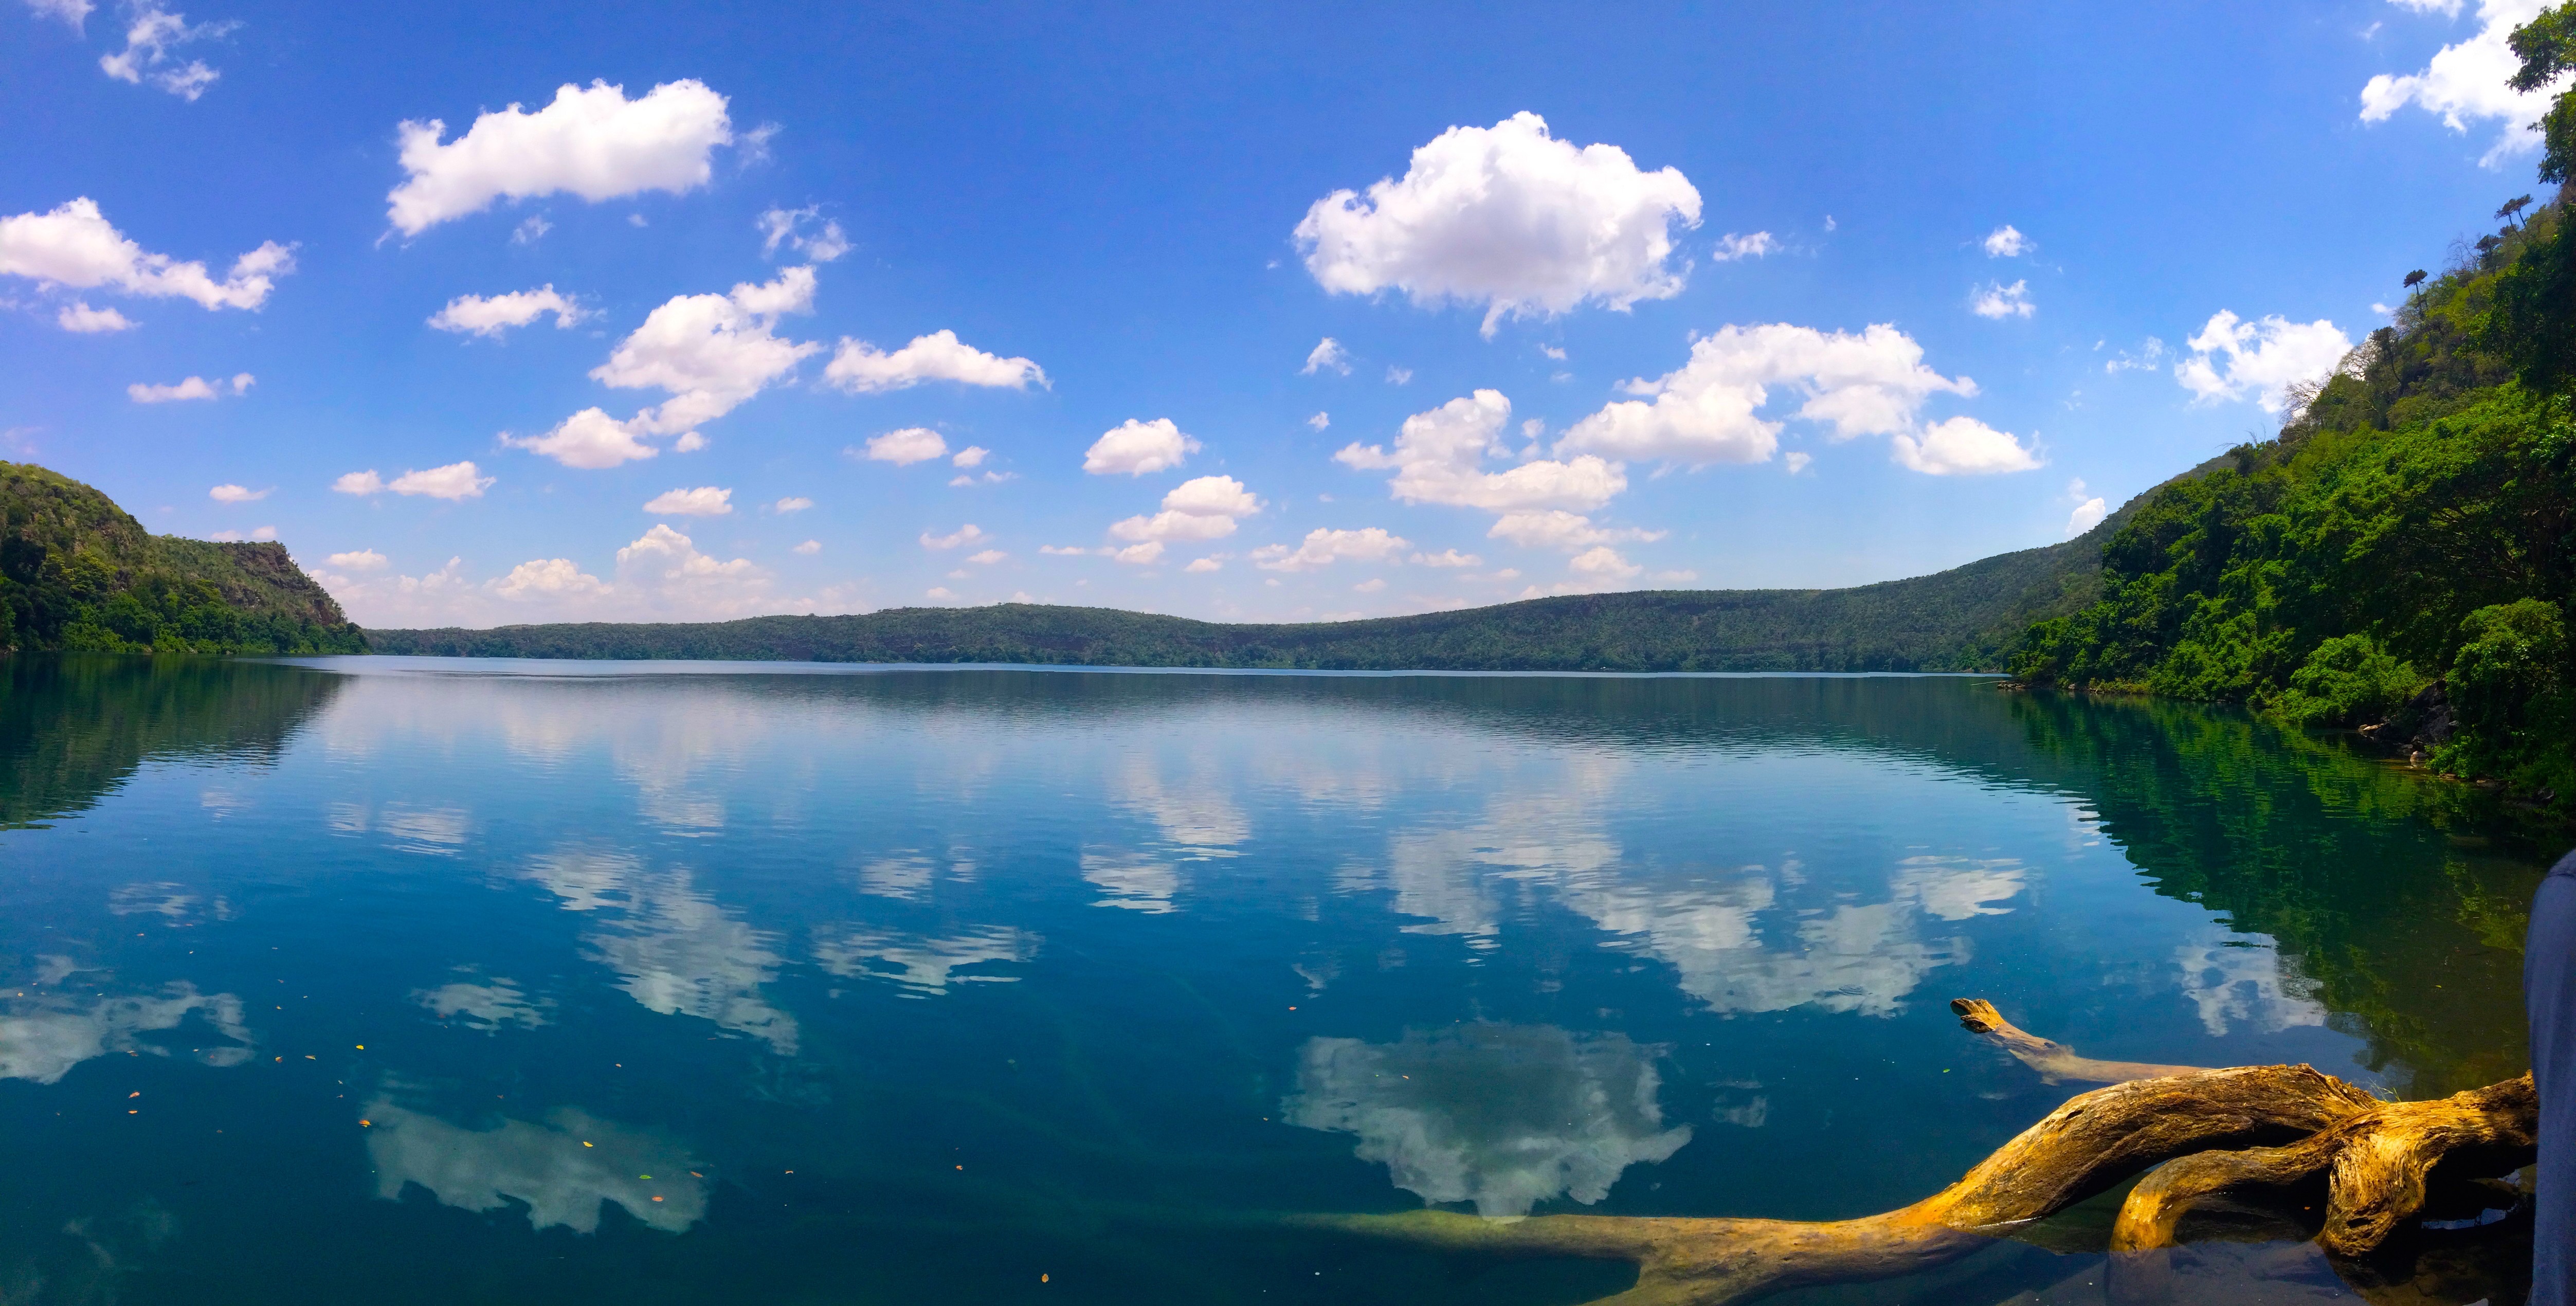 Lake Challa